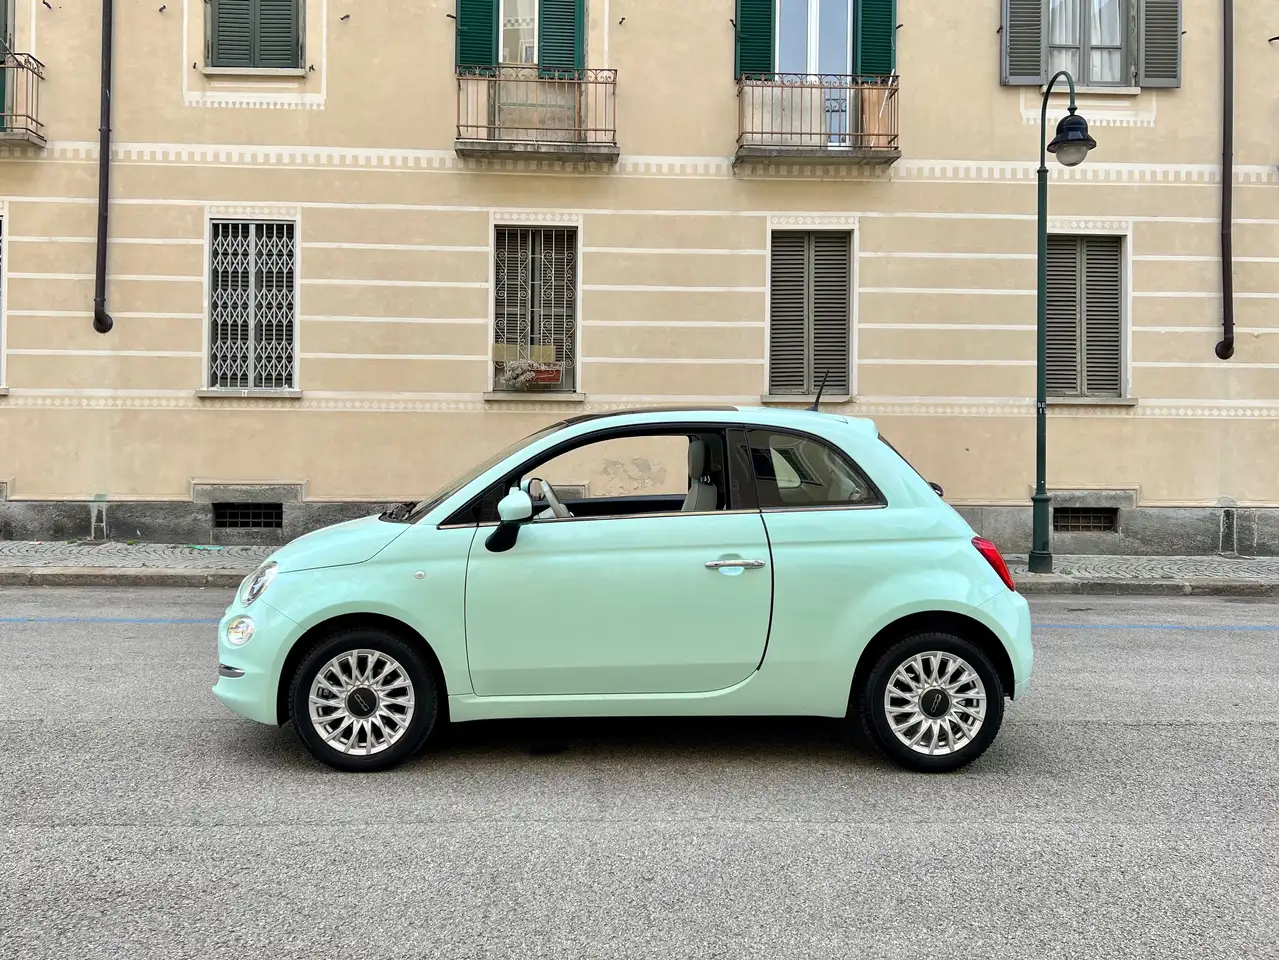 usato Fiat 500 City car a TORINO-TO per € 11.800,-